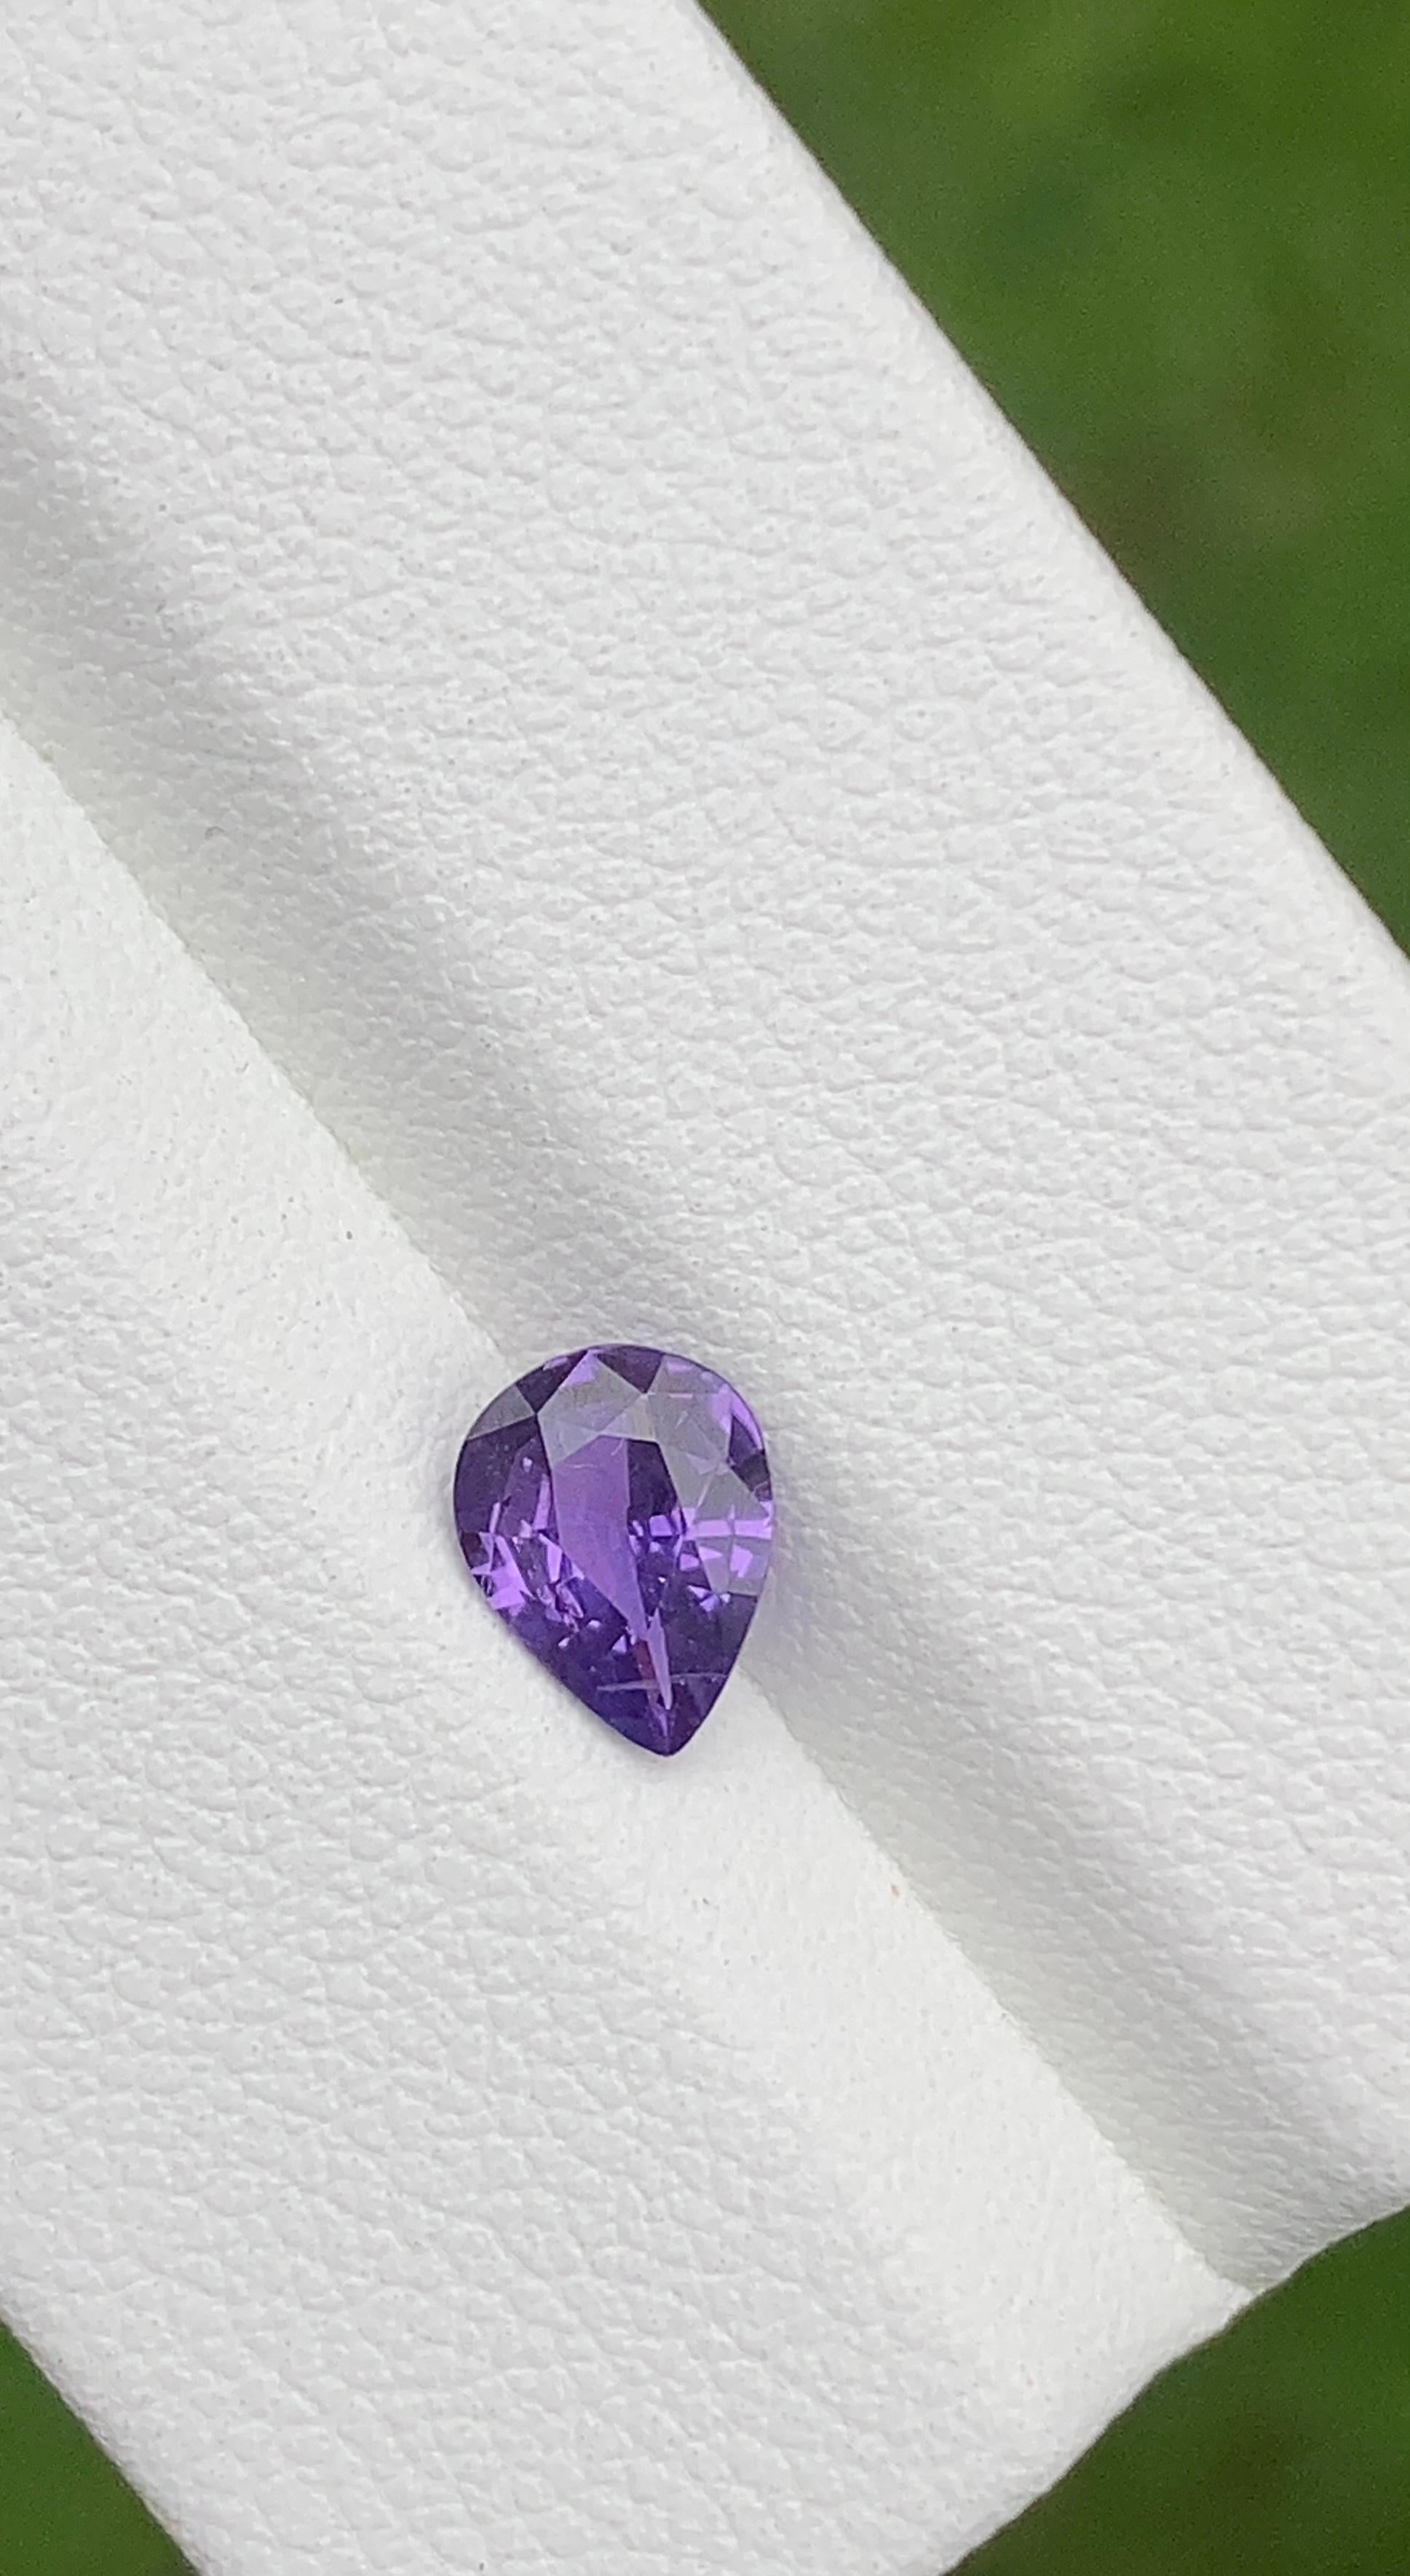 Ceylon Purple sapphire 0.75 Carats unheated

• Variety: Sapphire
• Origin: Sri Lanka (Ceylon)
• Color(s): Purple
• Shape/Cutting Style: Drop
• Cut: mix
• Dimensions: 6.2mm x 8.1mm x 4mm
• Calibrated: No
• Clarity Grade: VS1
• Treatment: None

Note: